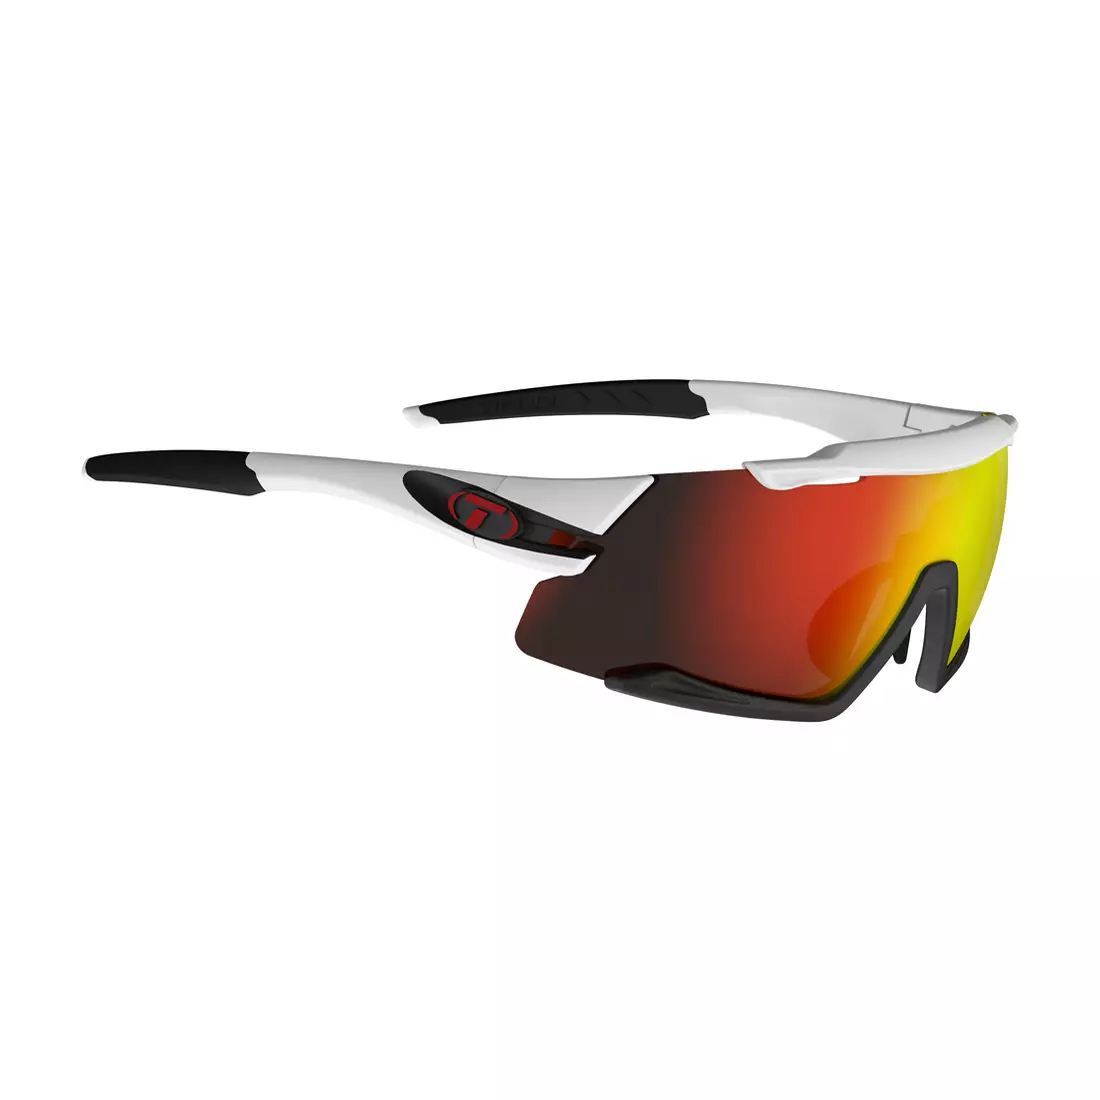 TIFOSI sportovní brýle s vyměnitelnými skly aethon clarion white/black (Clarion Red, AC Red, Clear) TFI-1580104821